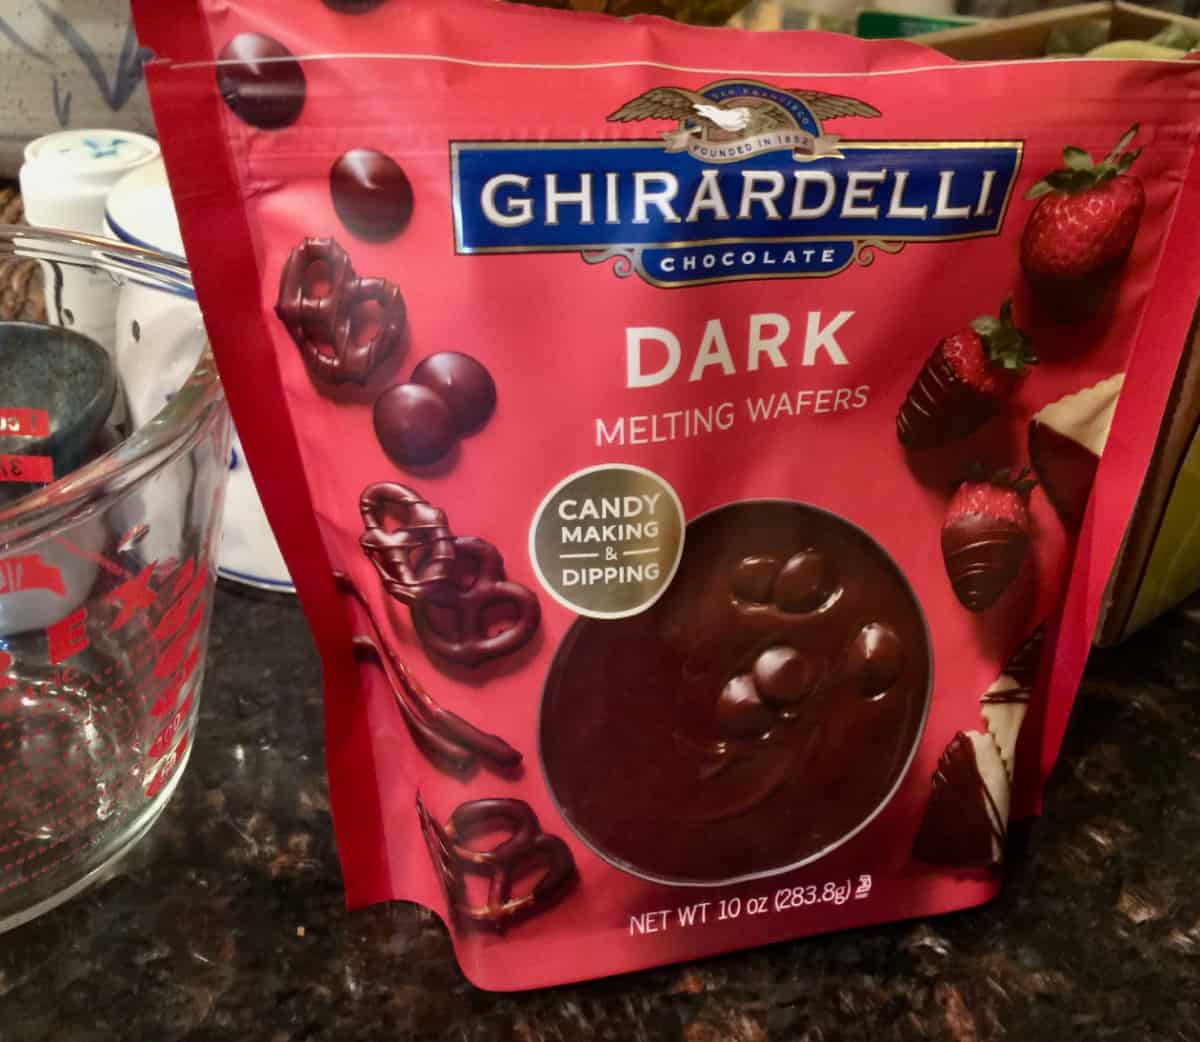 Bag of Ghirardelli dark chocolate melting wafers.